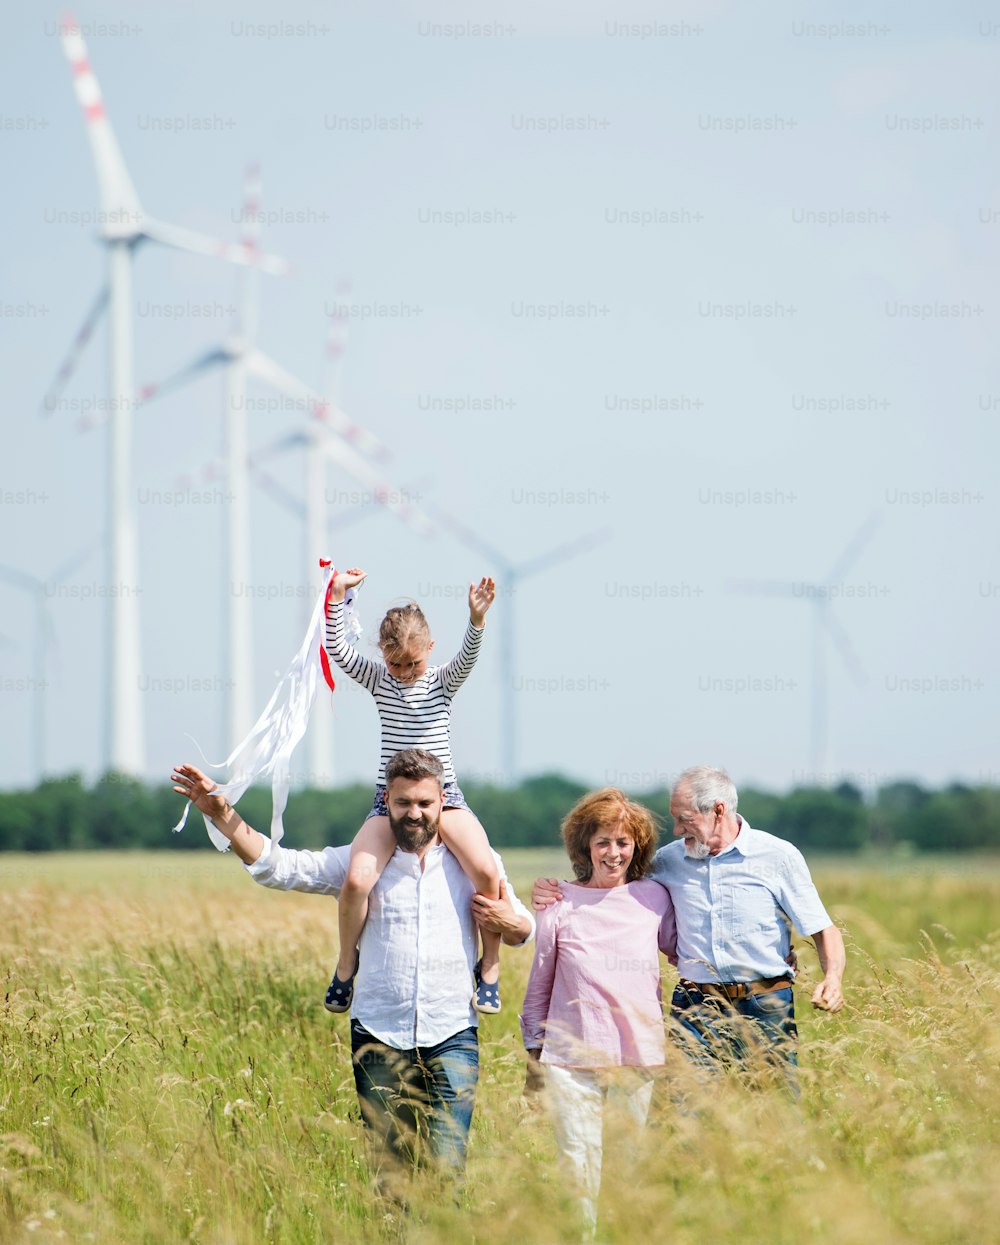 A front view of multigeneration family walking on field on wind farm.